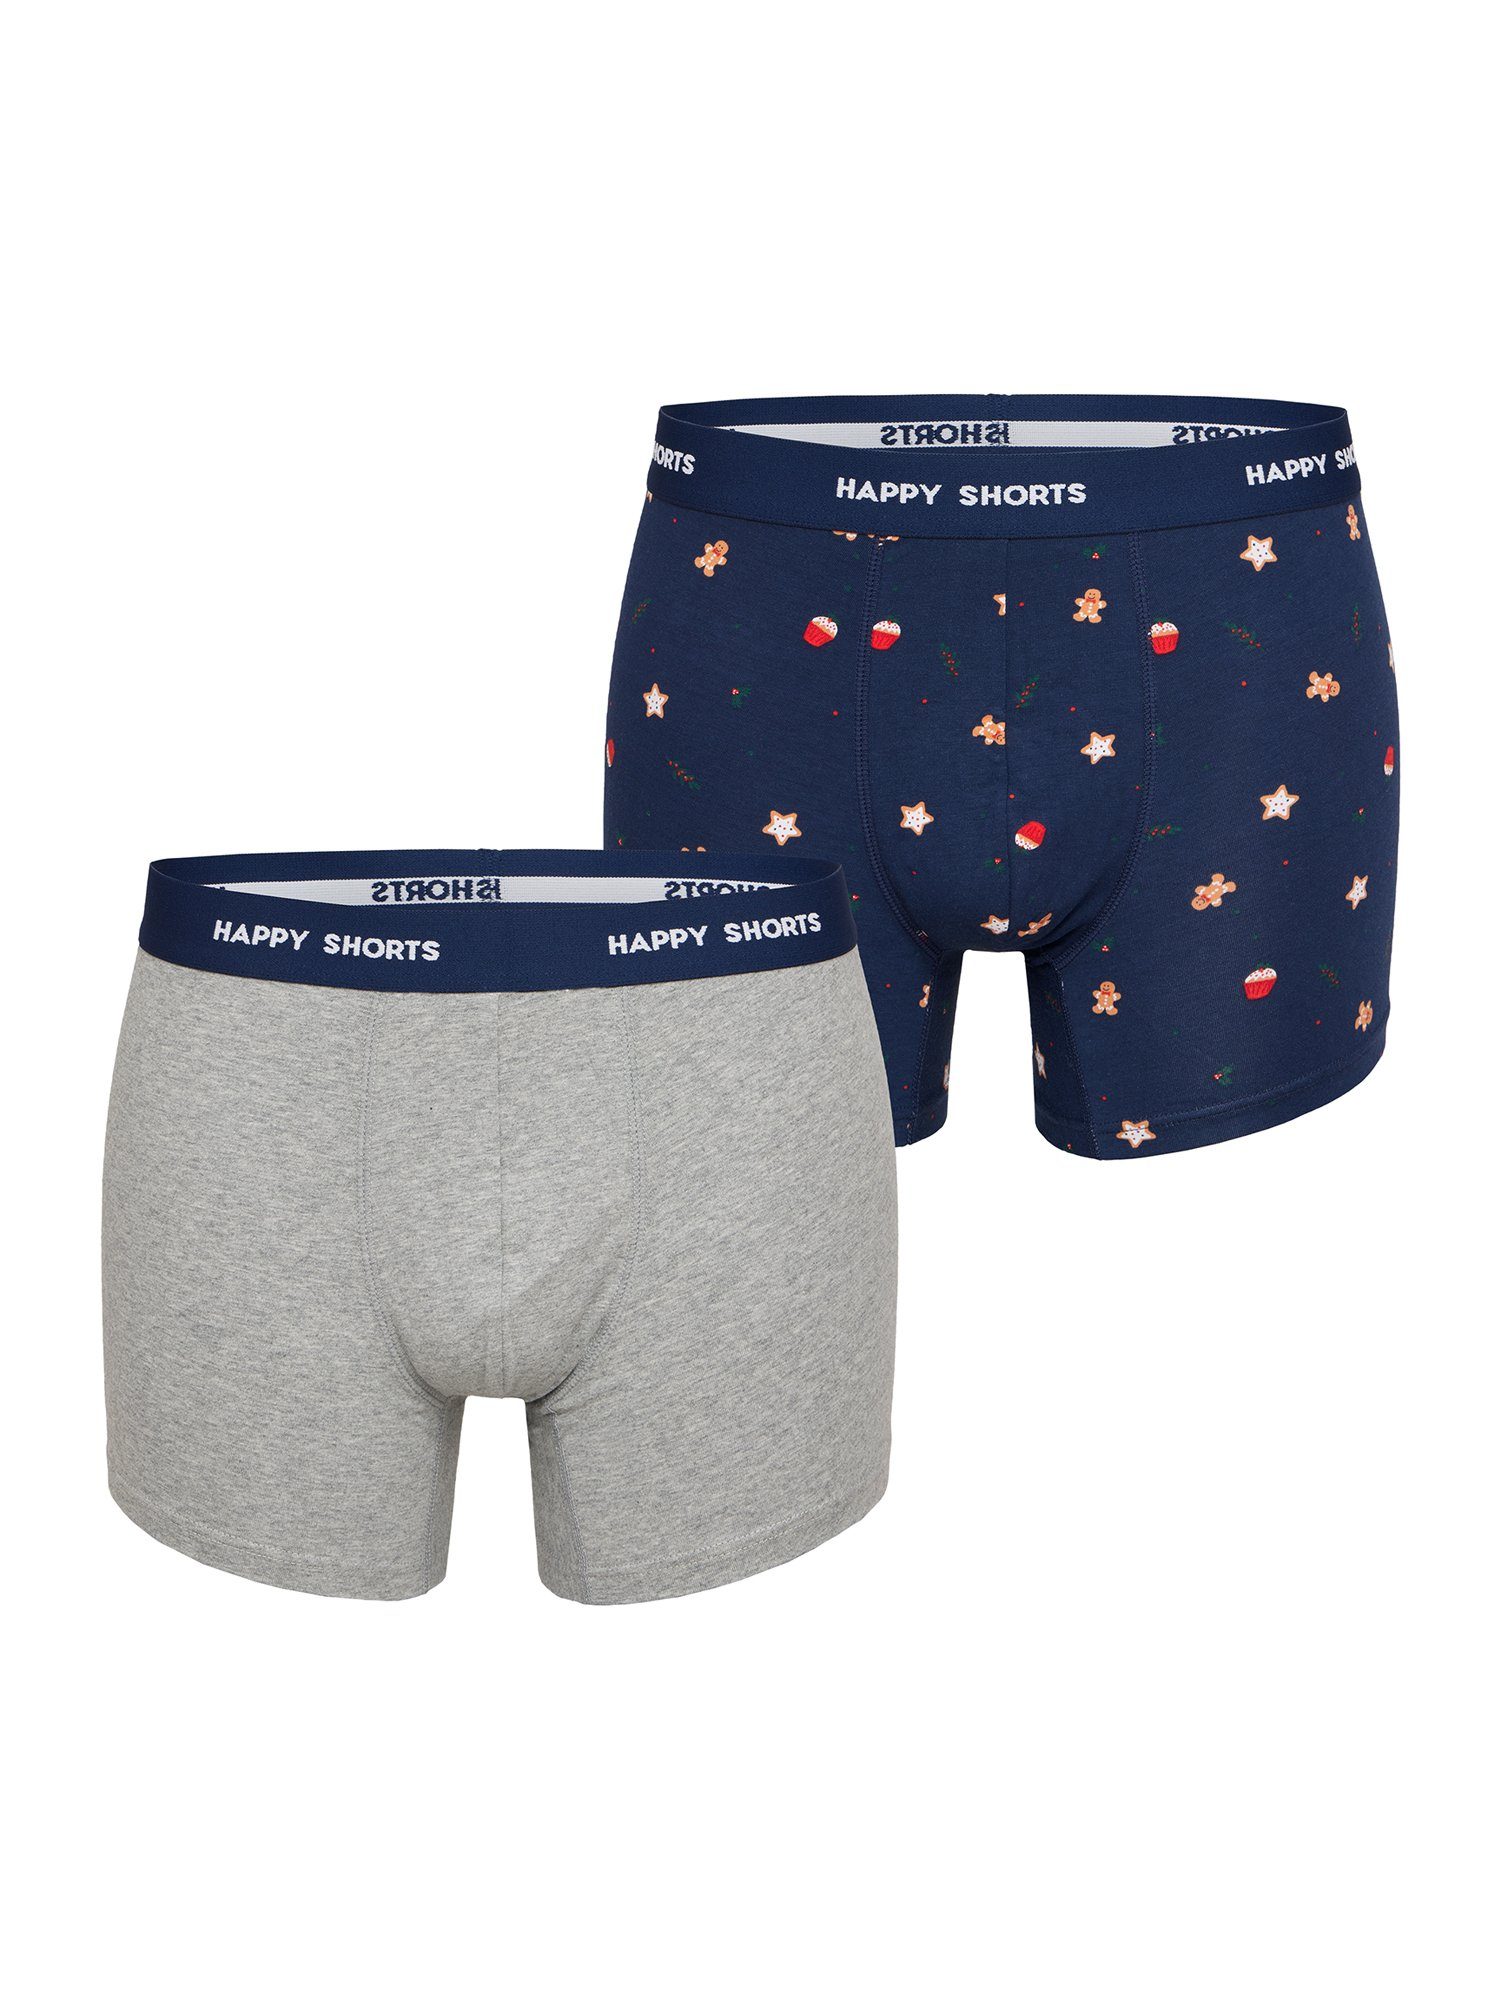 Pants Retro SHORTS Retro-Boxer HAPPY Retro-shorts (2-St) Cookies XMAS unterhose